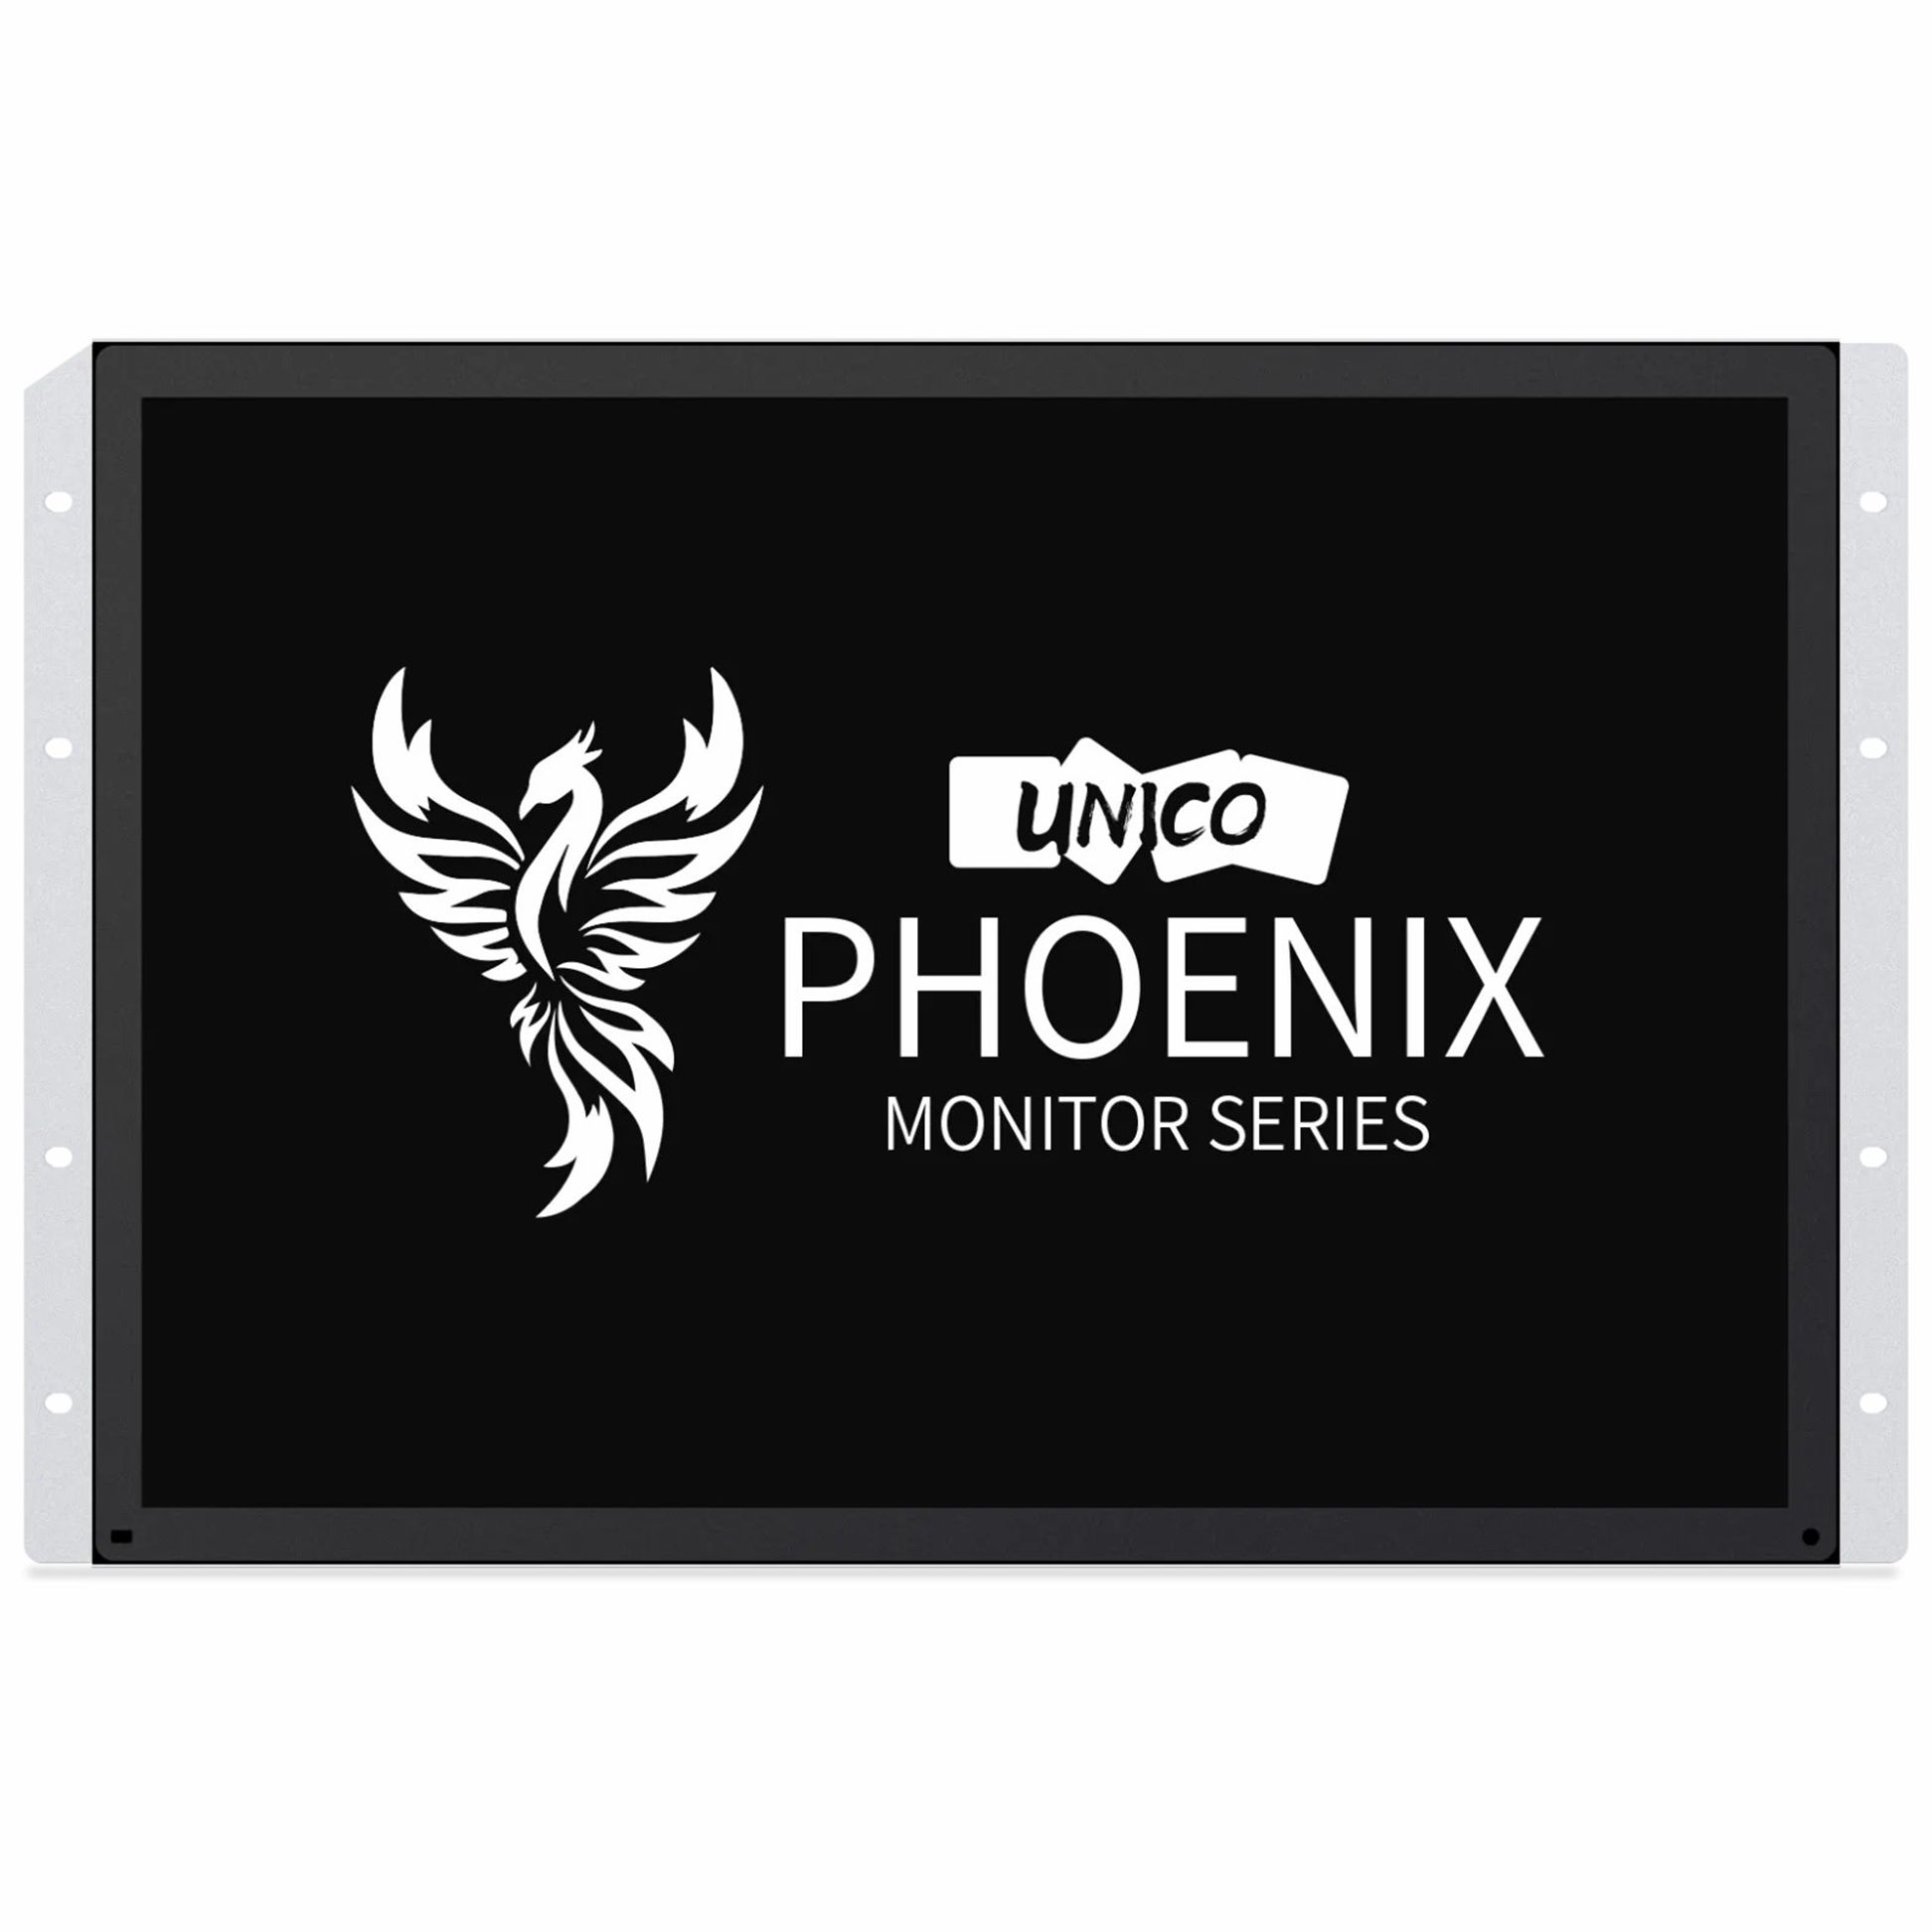 ULM26 Unico Phoenix Series of Arcade CRT Replacement LCD Monitor